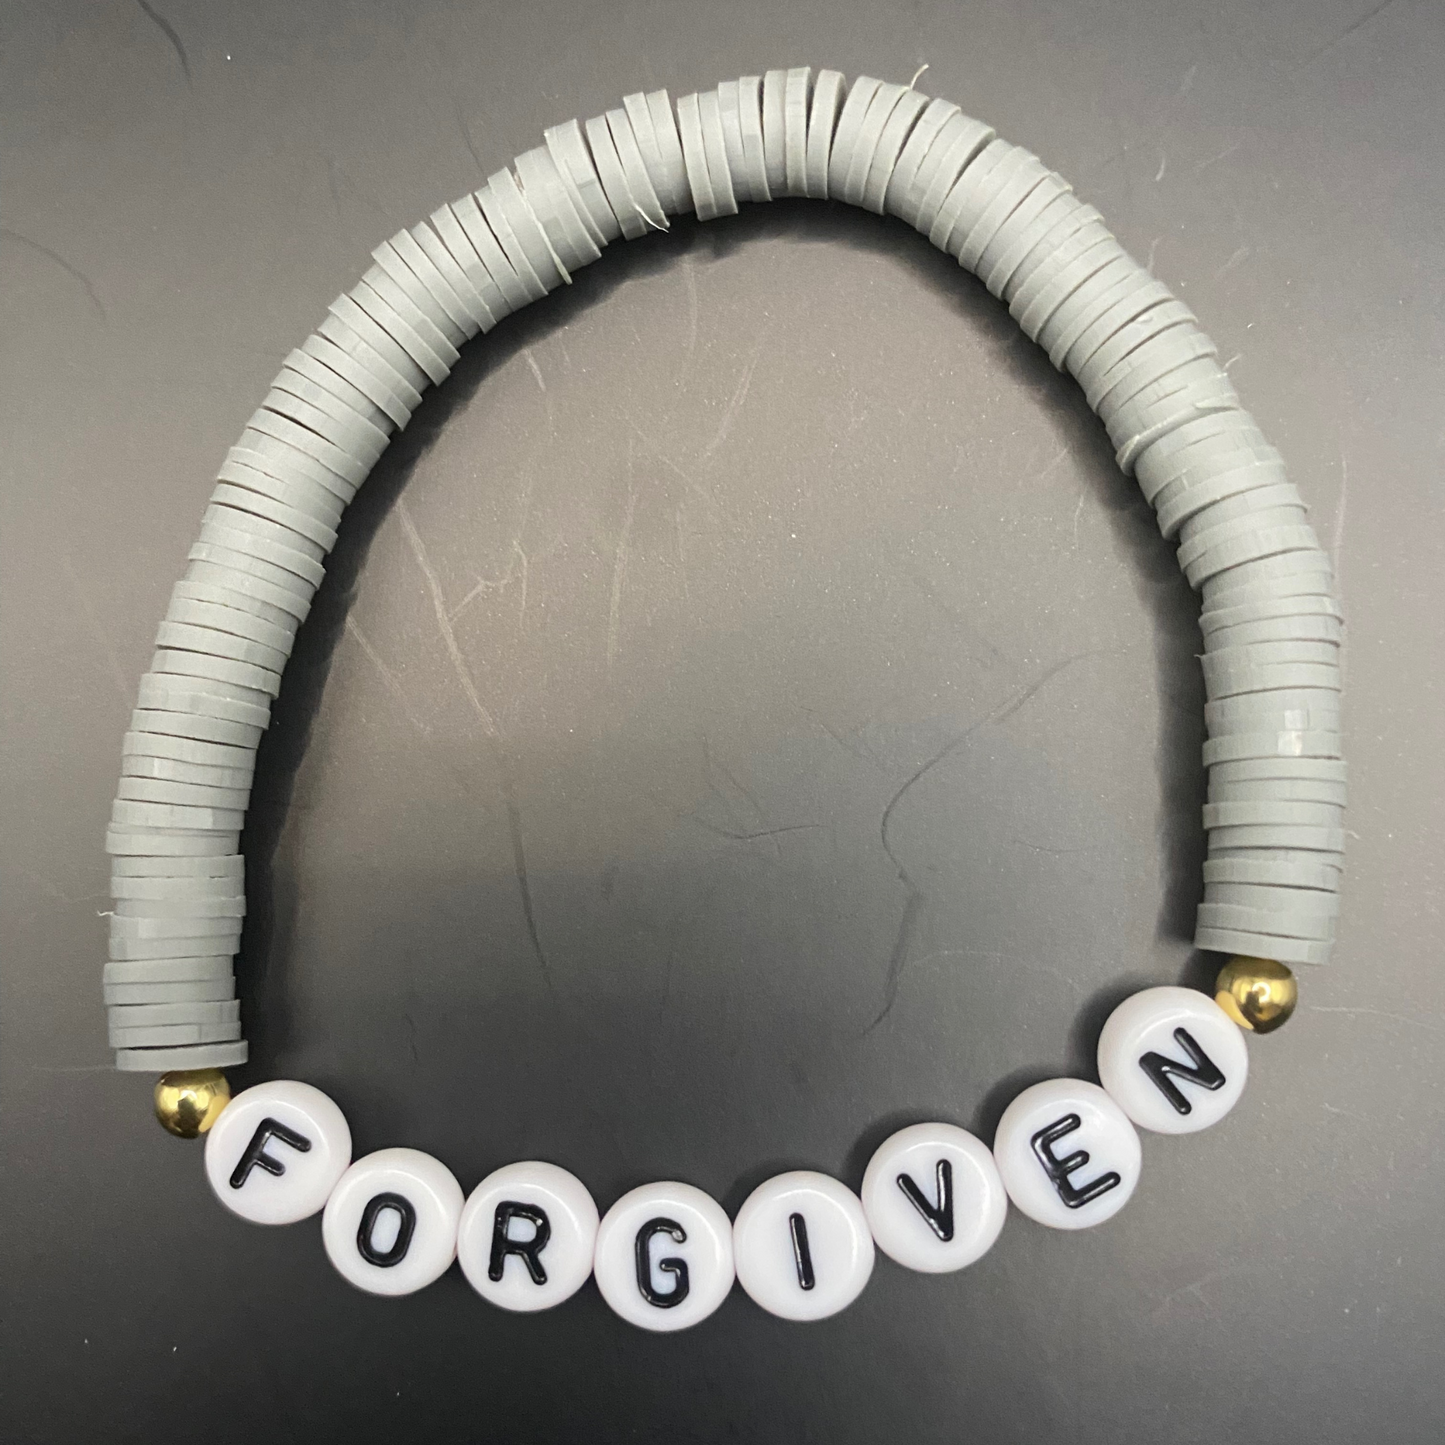 "Forgiven" Bracelet